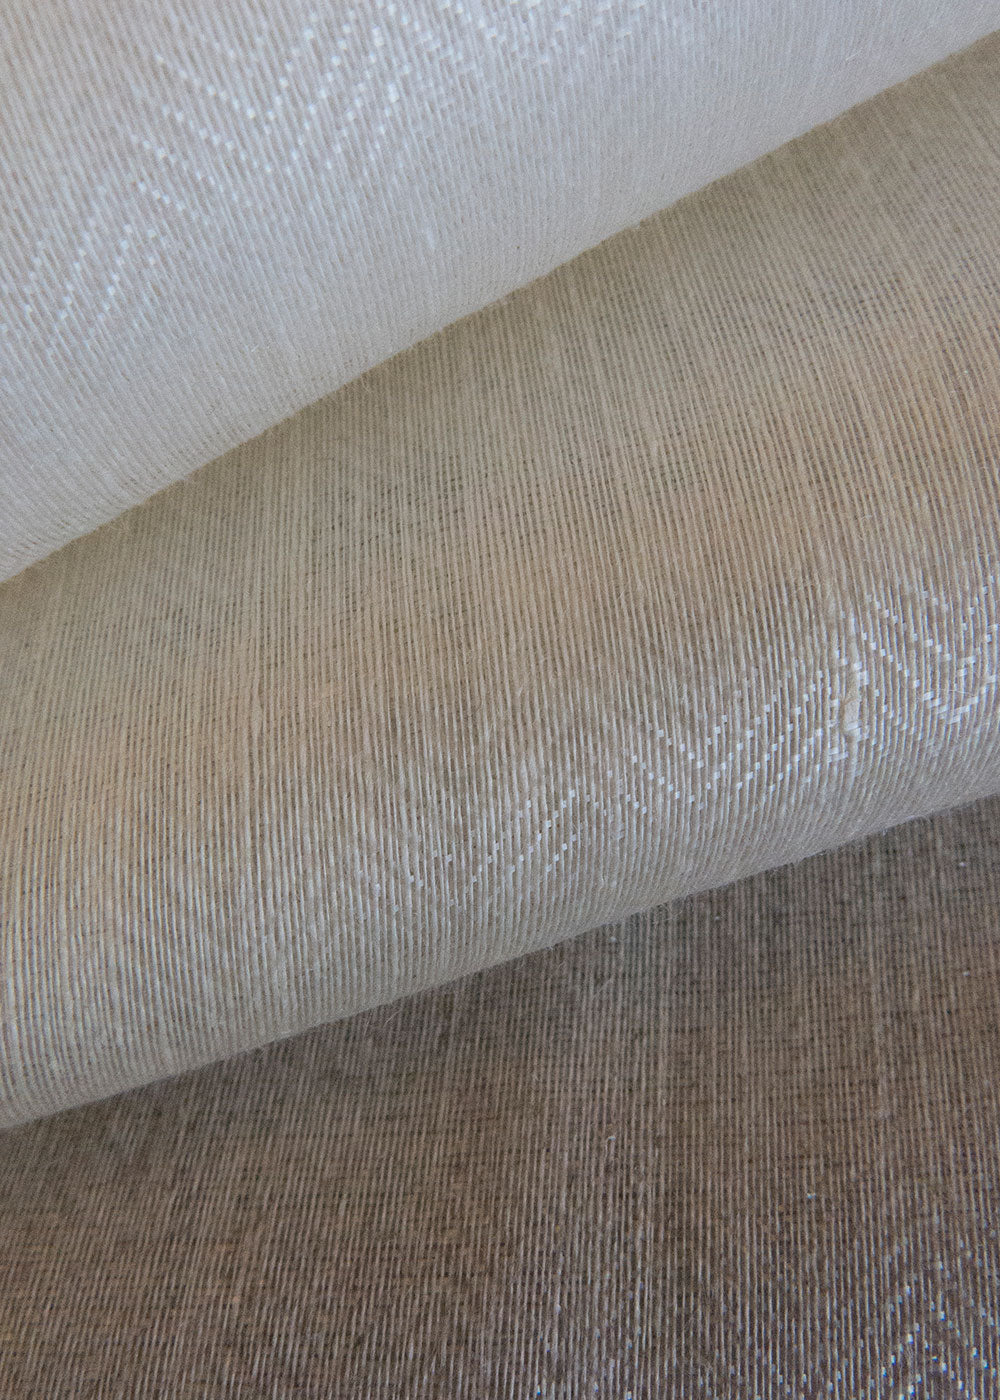 stack of herringbone weave sheer fabrics with a glazed finish